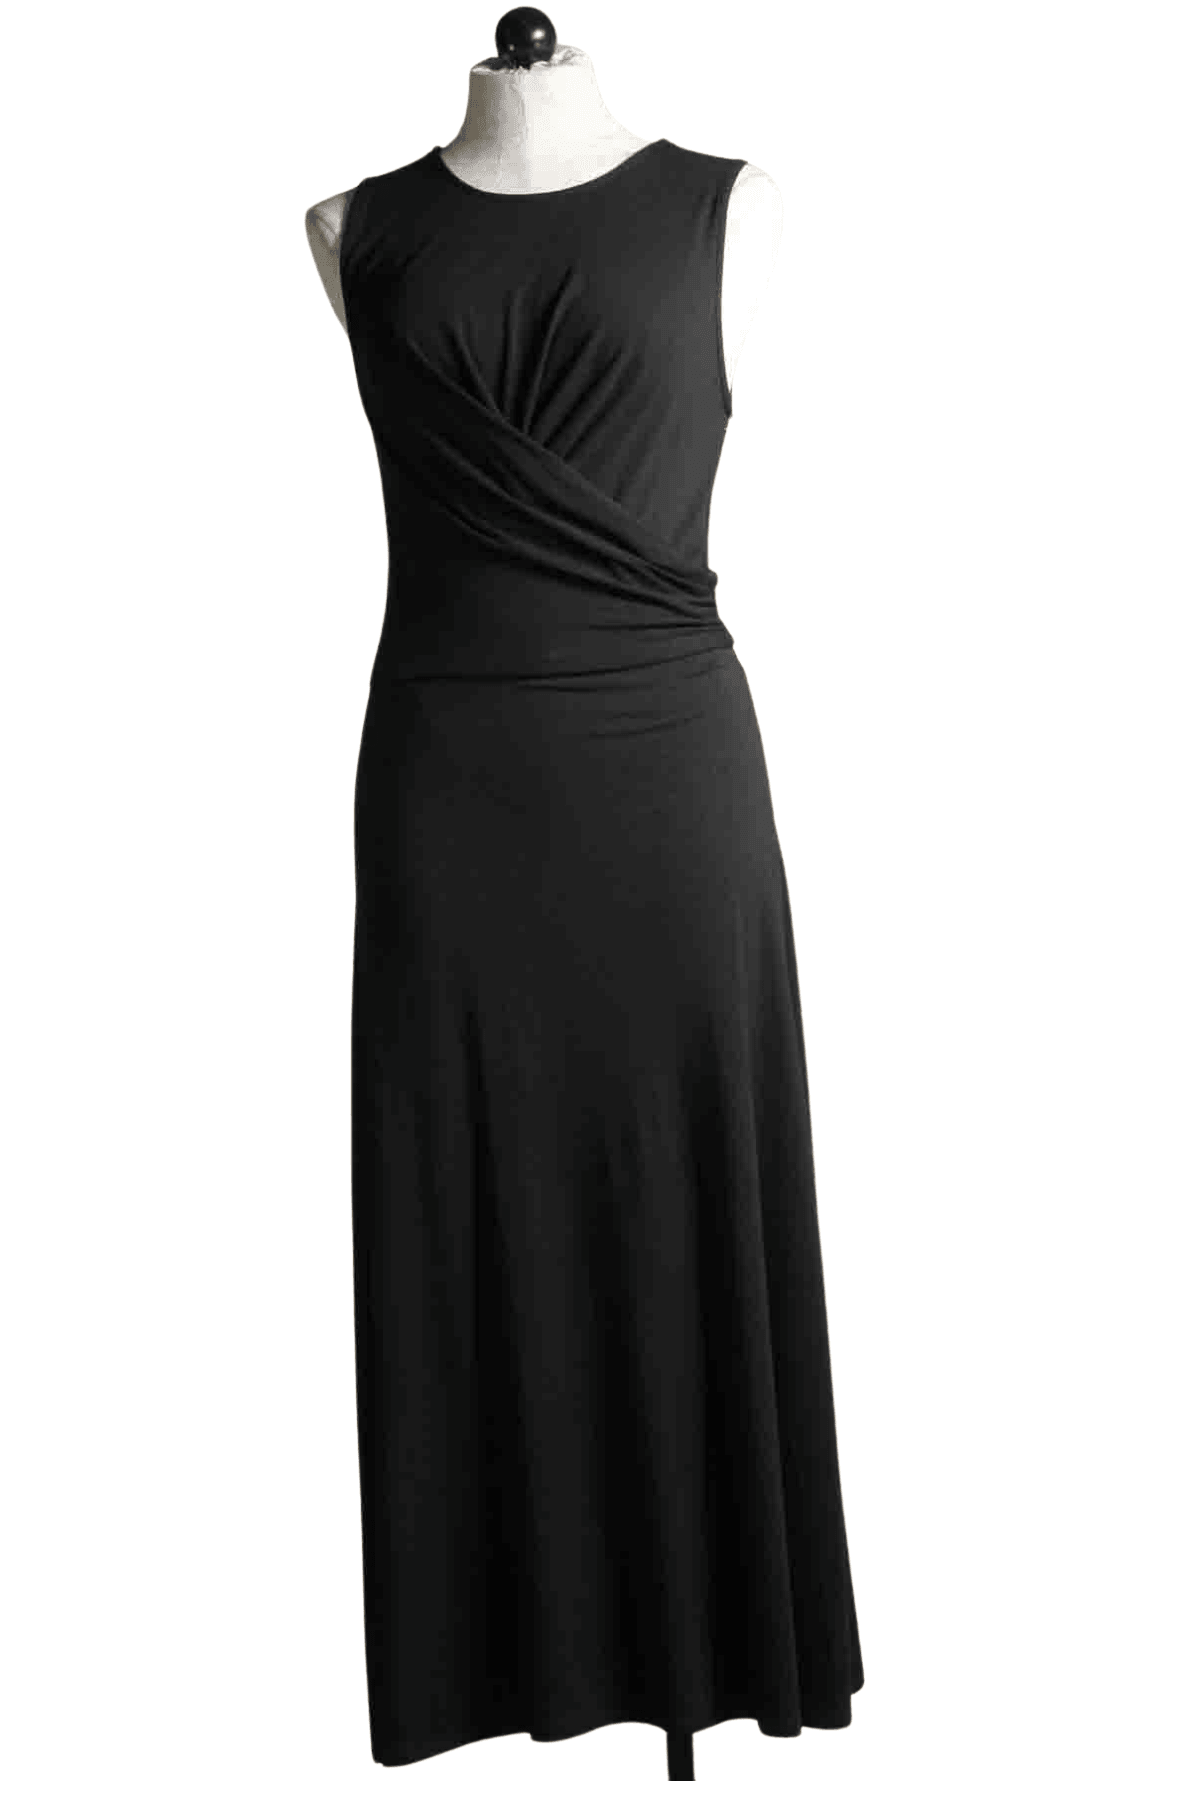 Black Sleeveless Drape Front Midi Length Dress by Fifteen Twenty